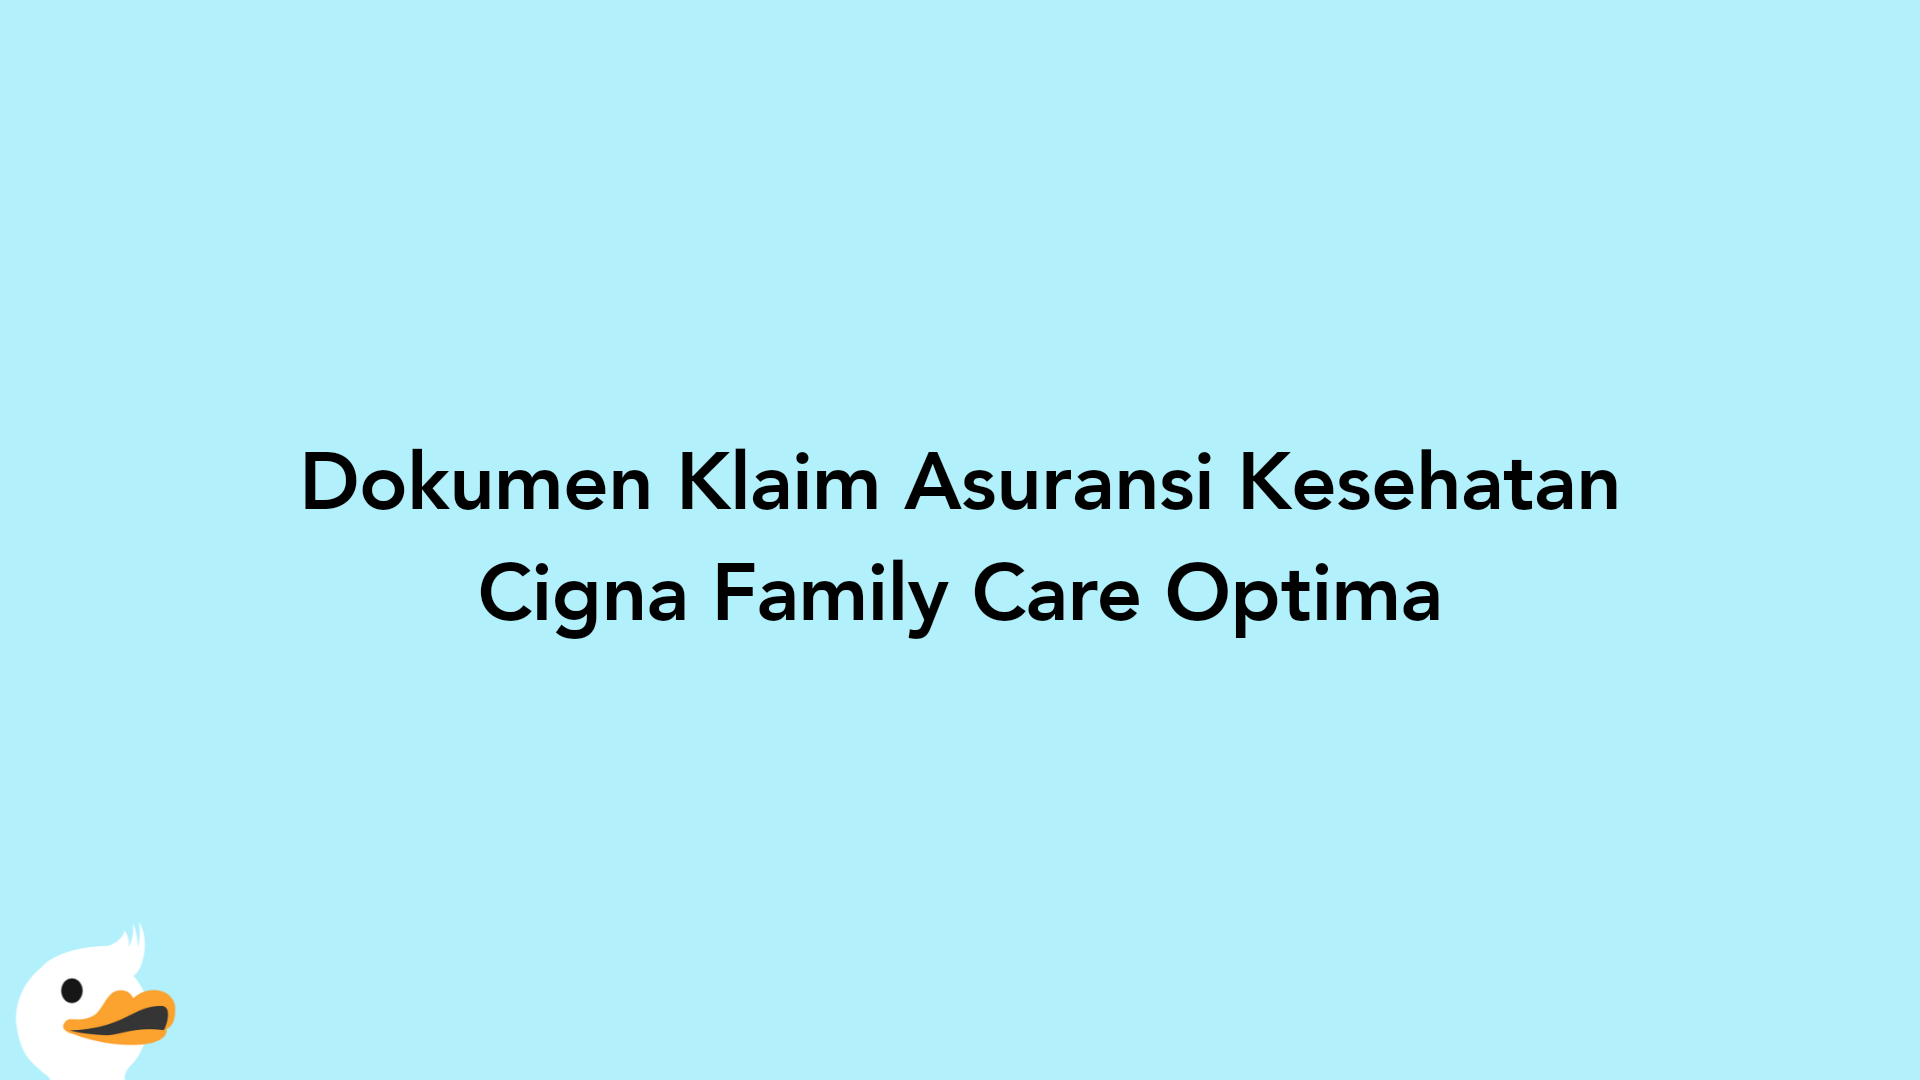 Dokumen Klaim Asuransi Kesehatan Cigna Family Care Optima